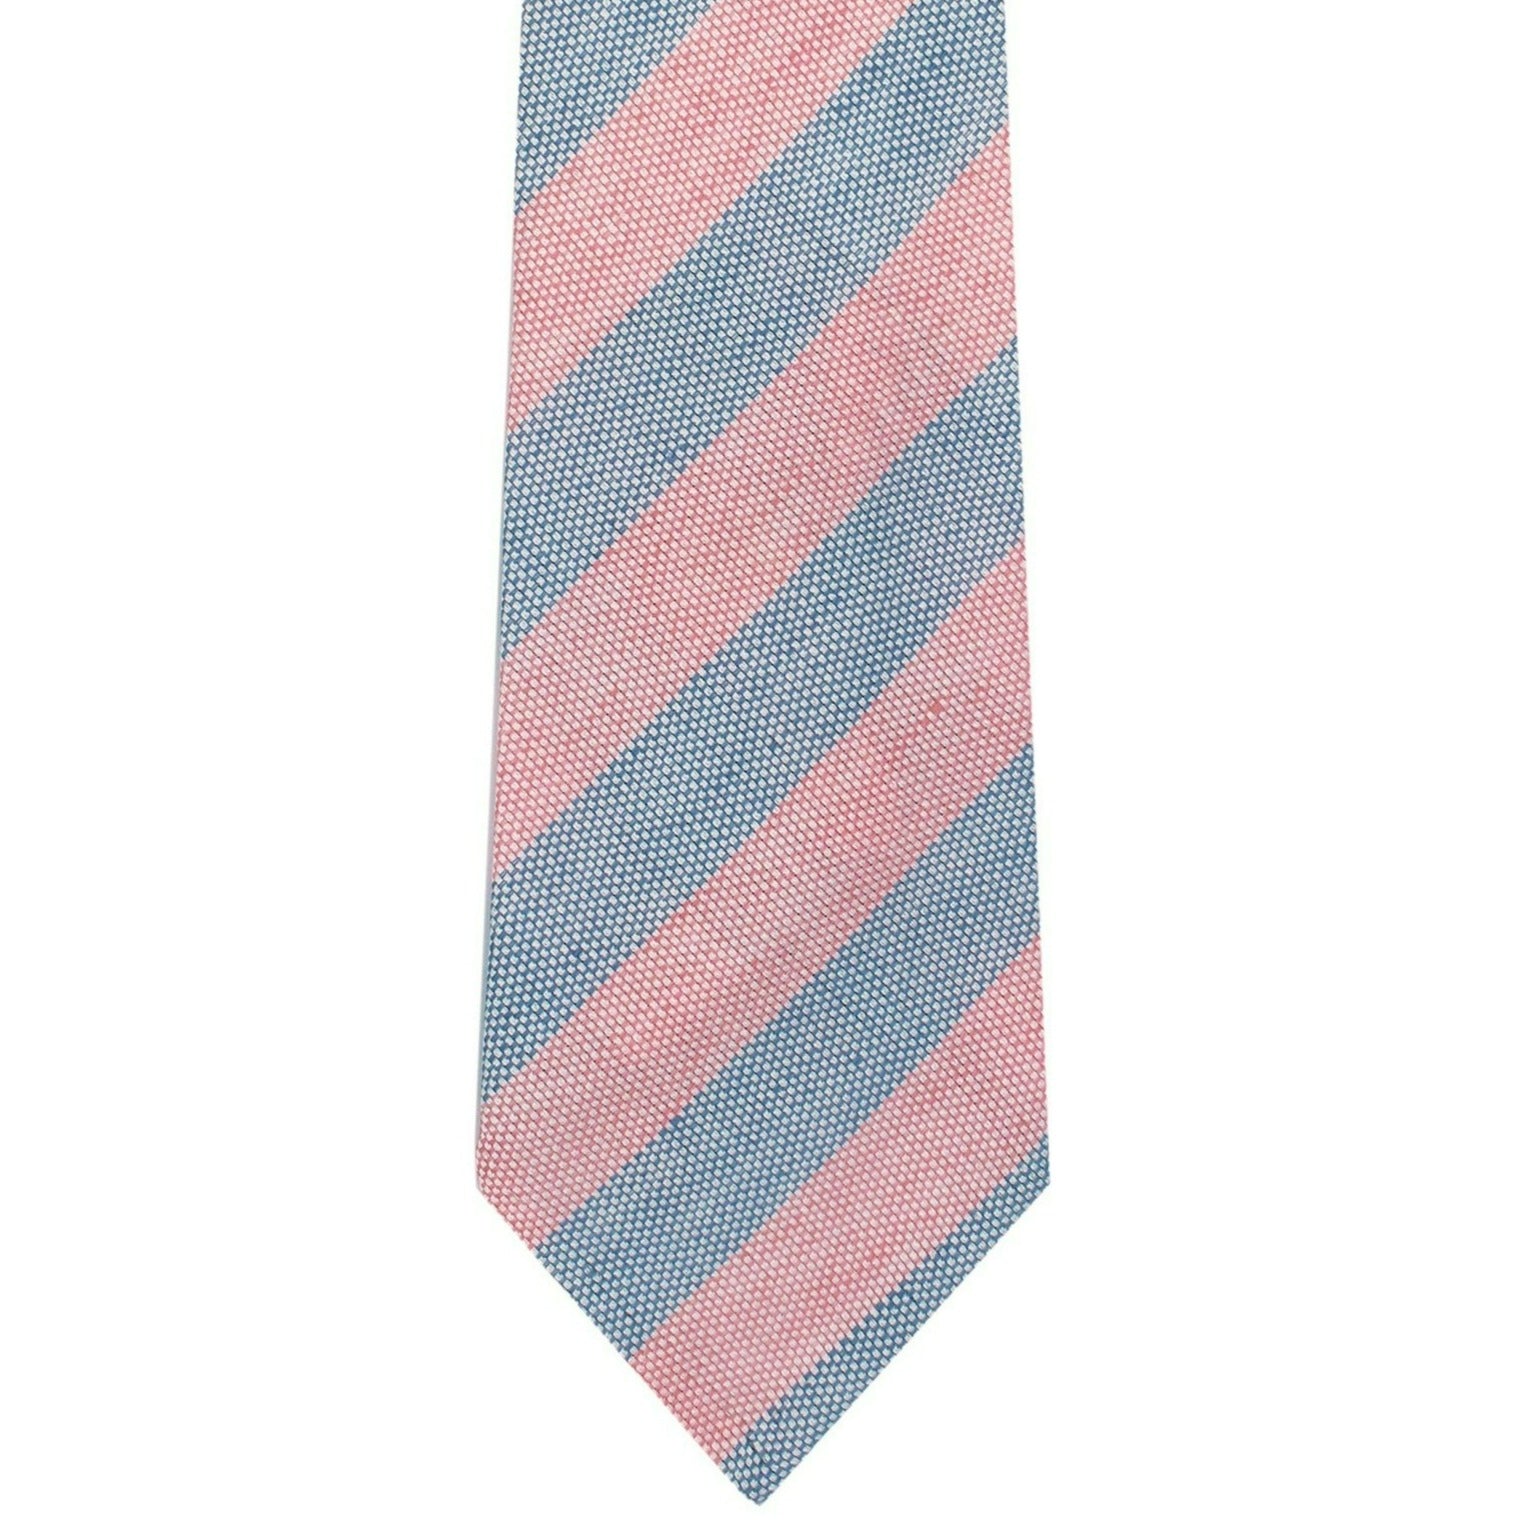 Anversa linen and cotton tie